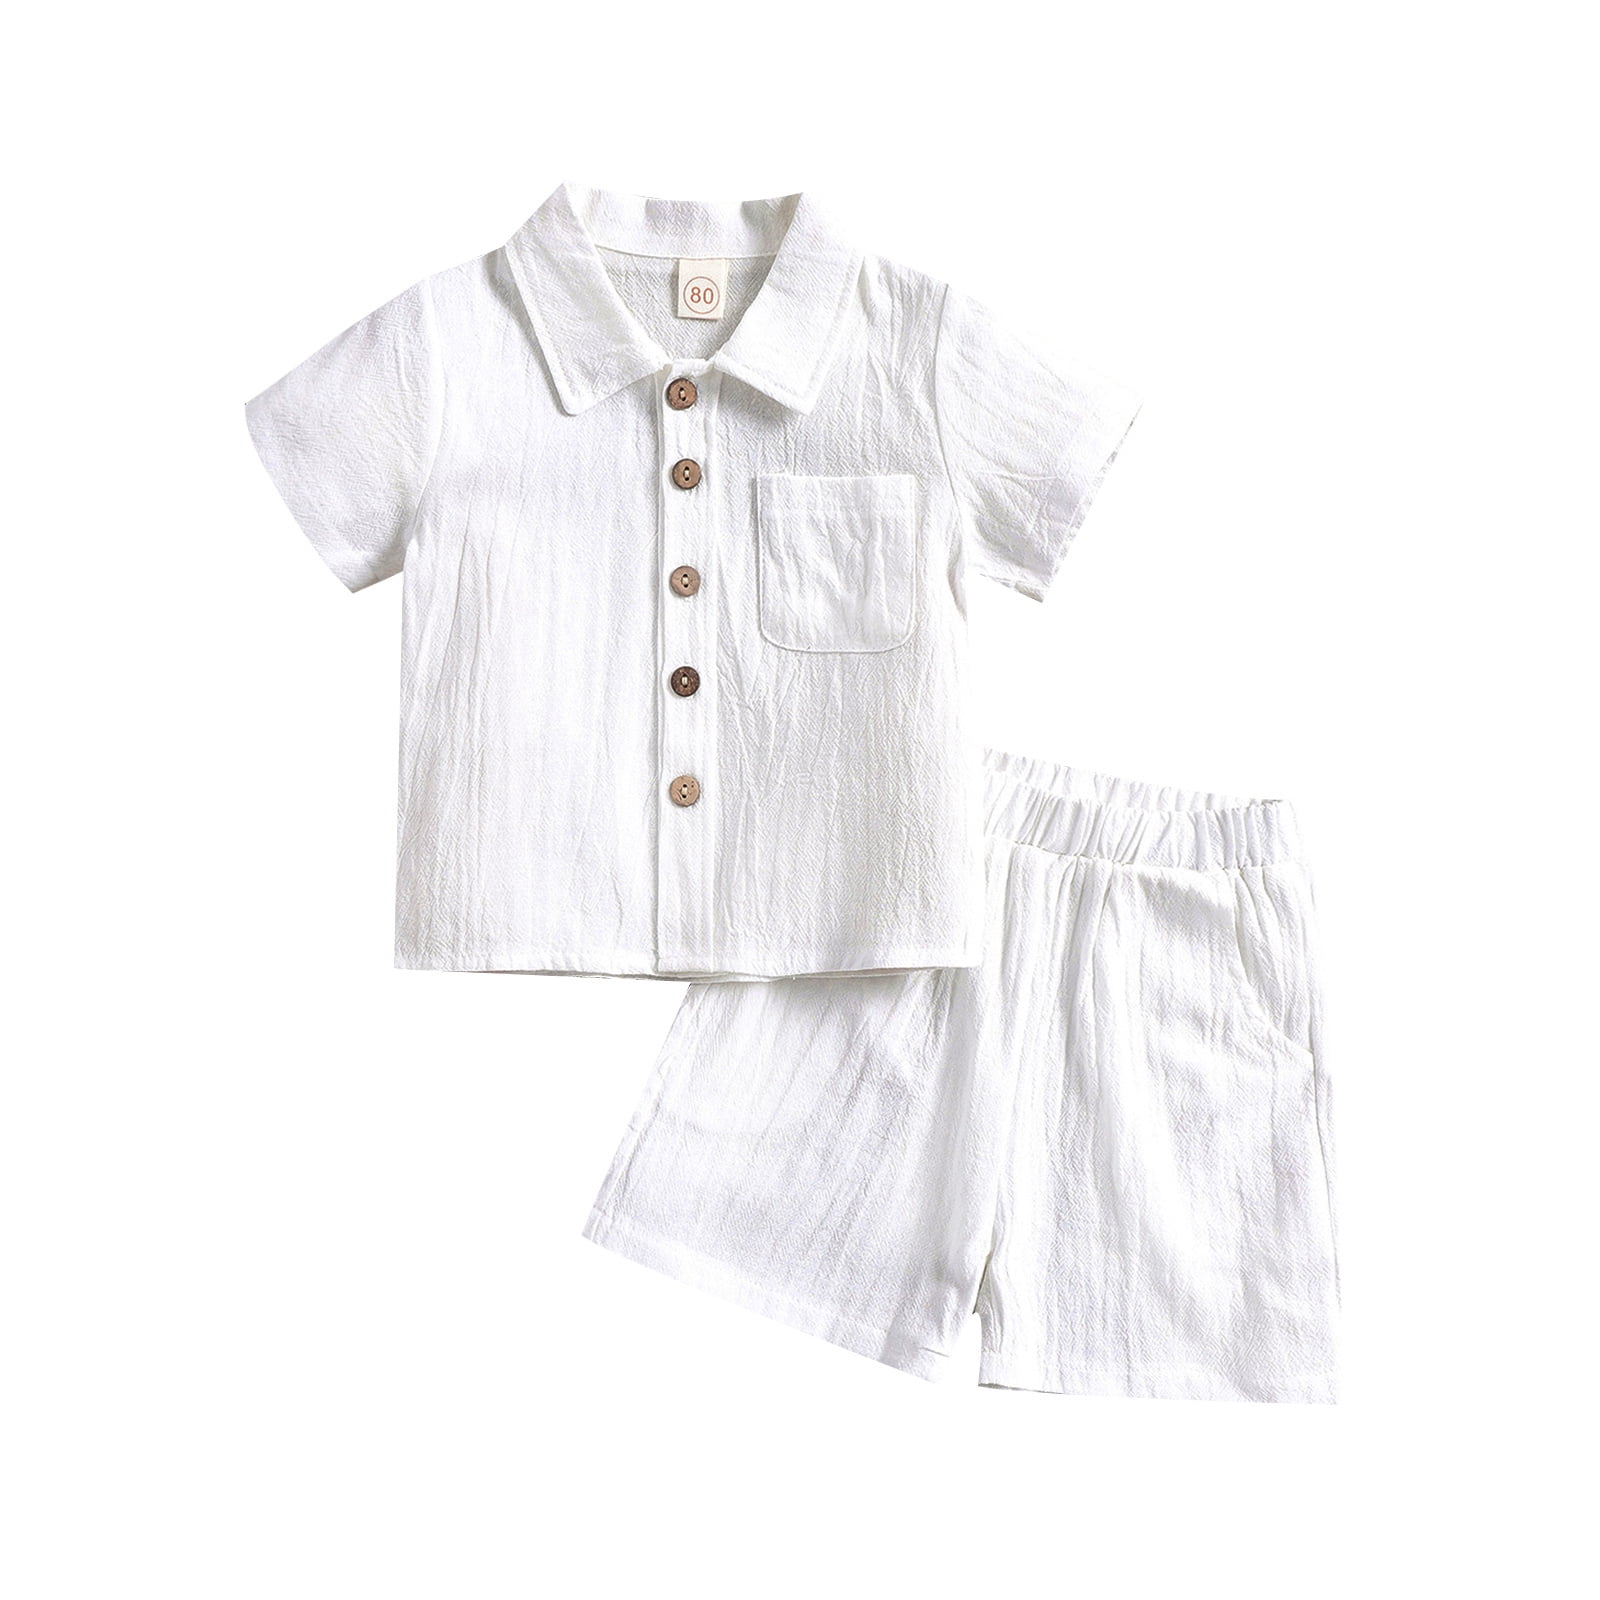 Boy's Size 24 Mos Jumping Beans Tan/White Stripe Linen Shorts New Nwt #10313 